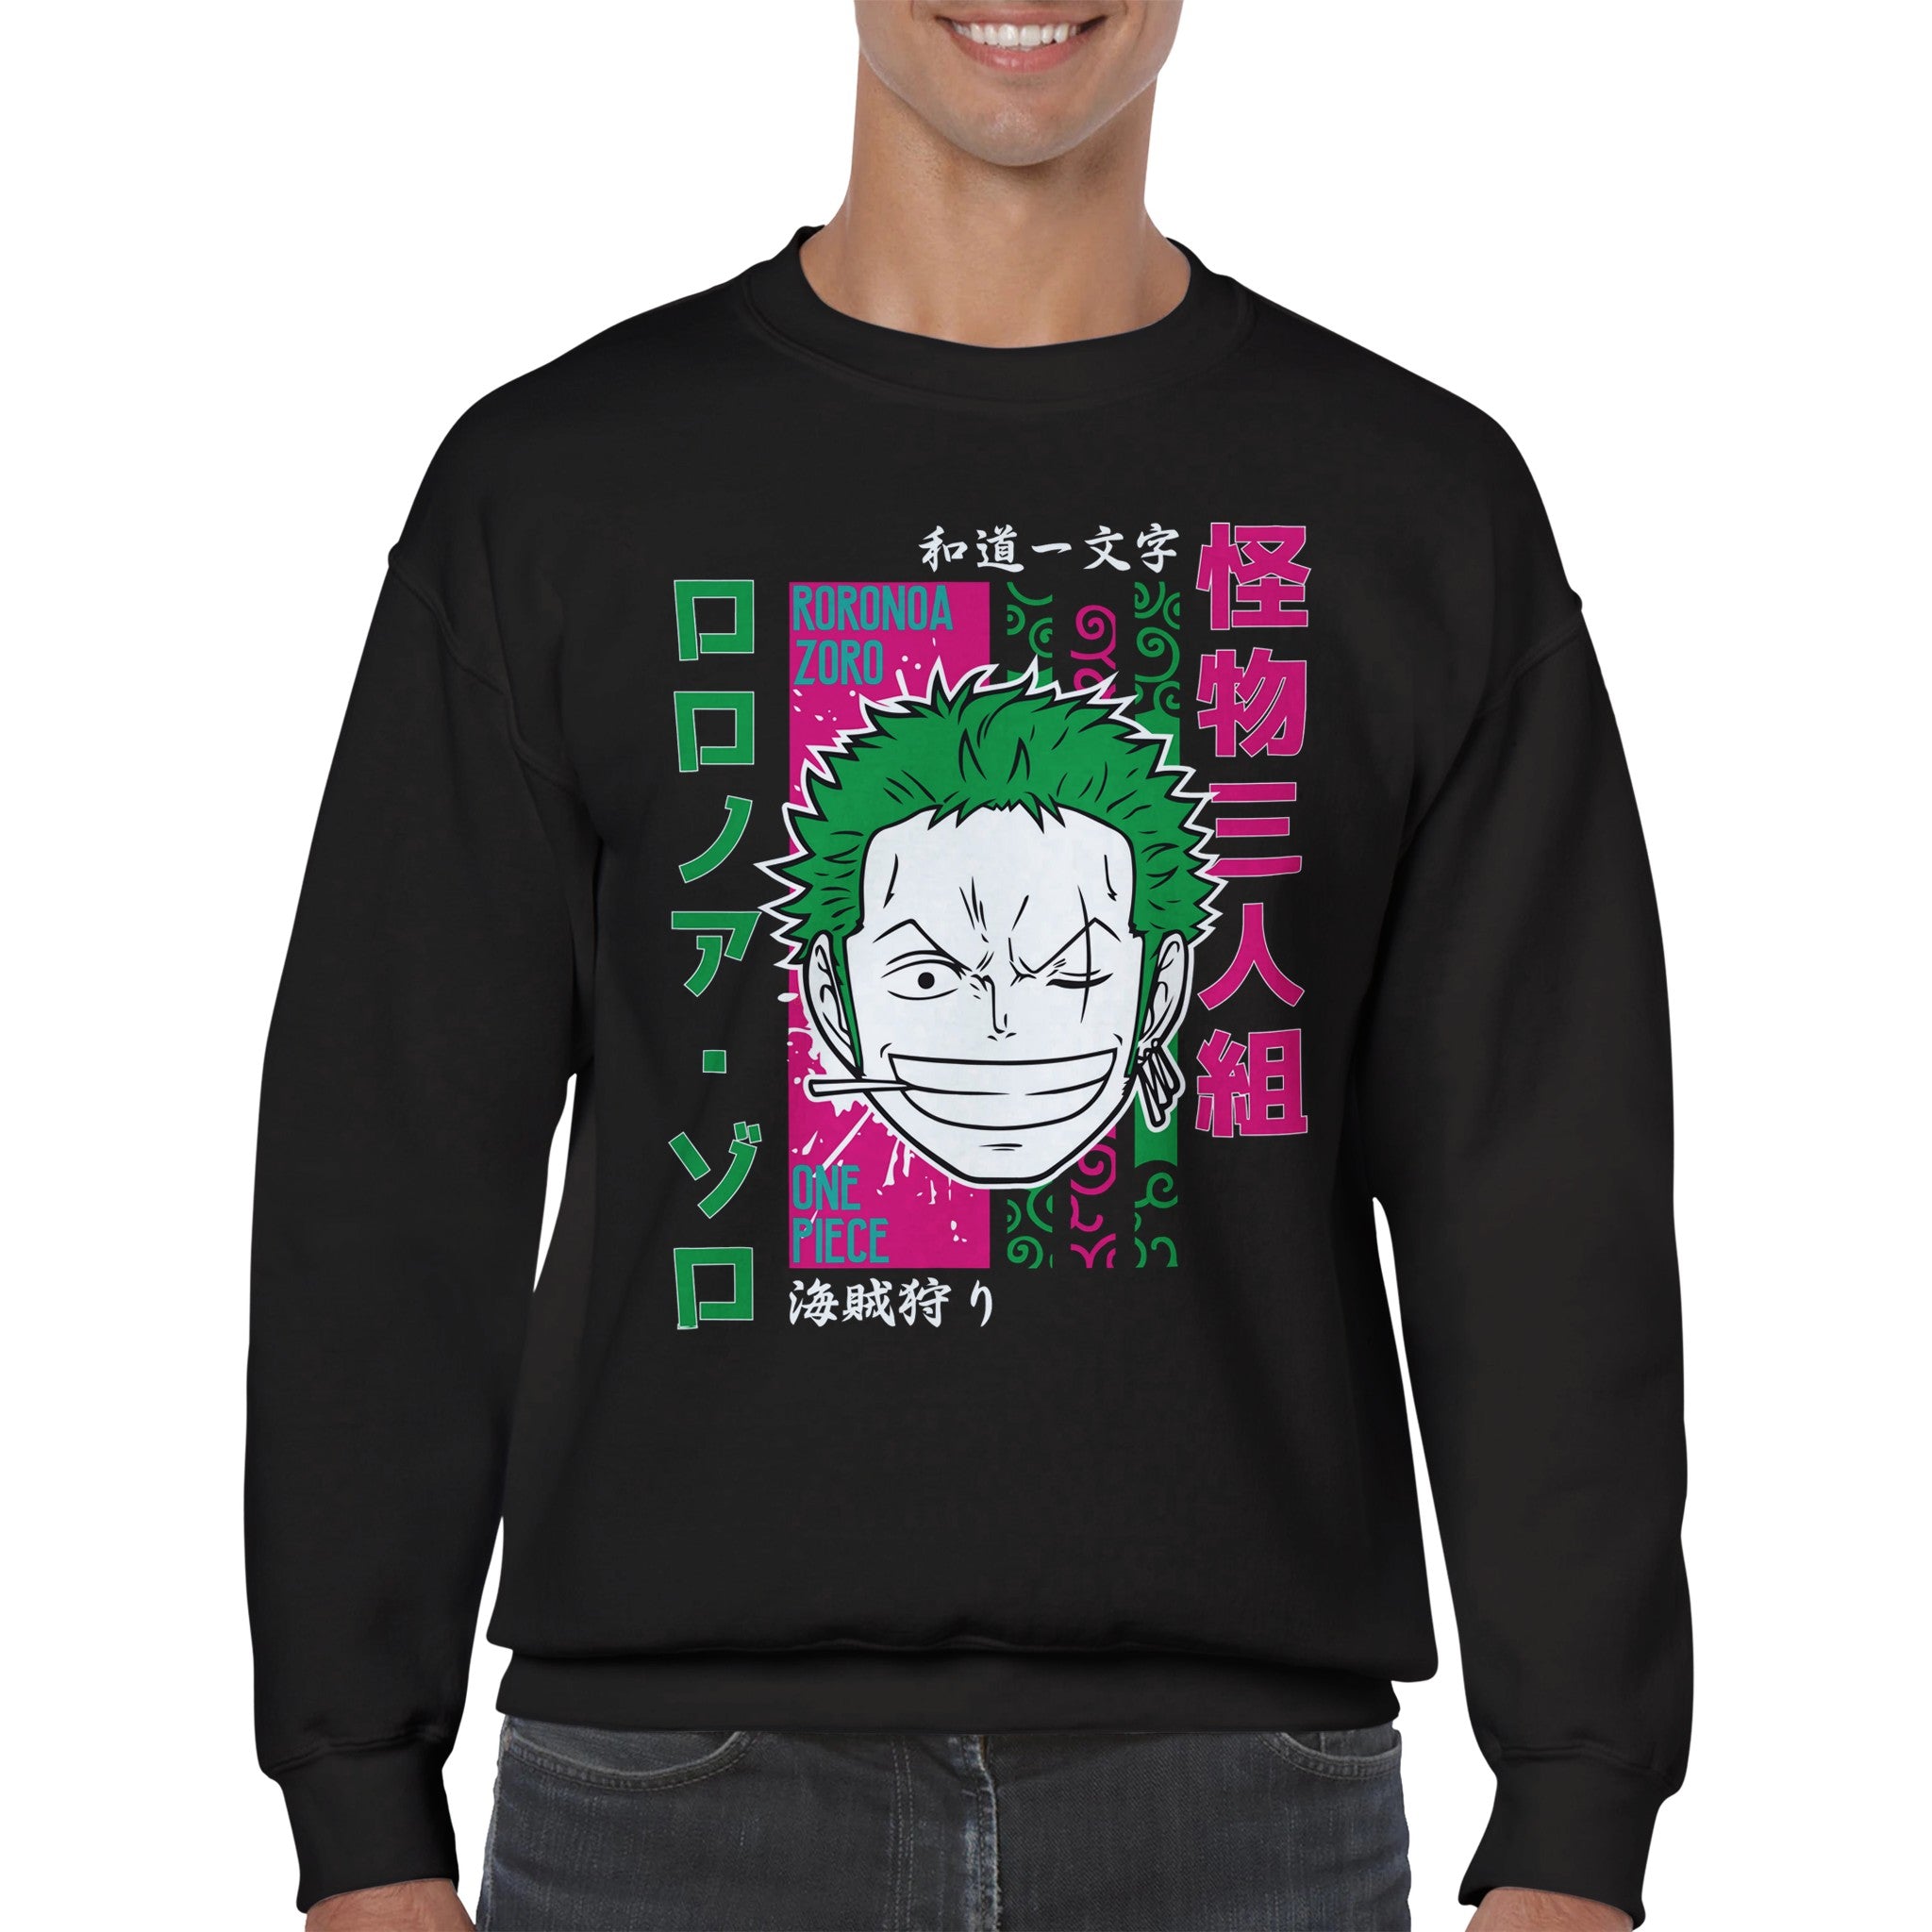 shop and buy one piece anime clothing zoro sweatshirt/jumper/longsleeve